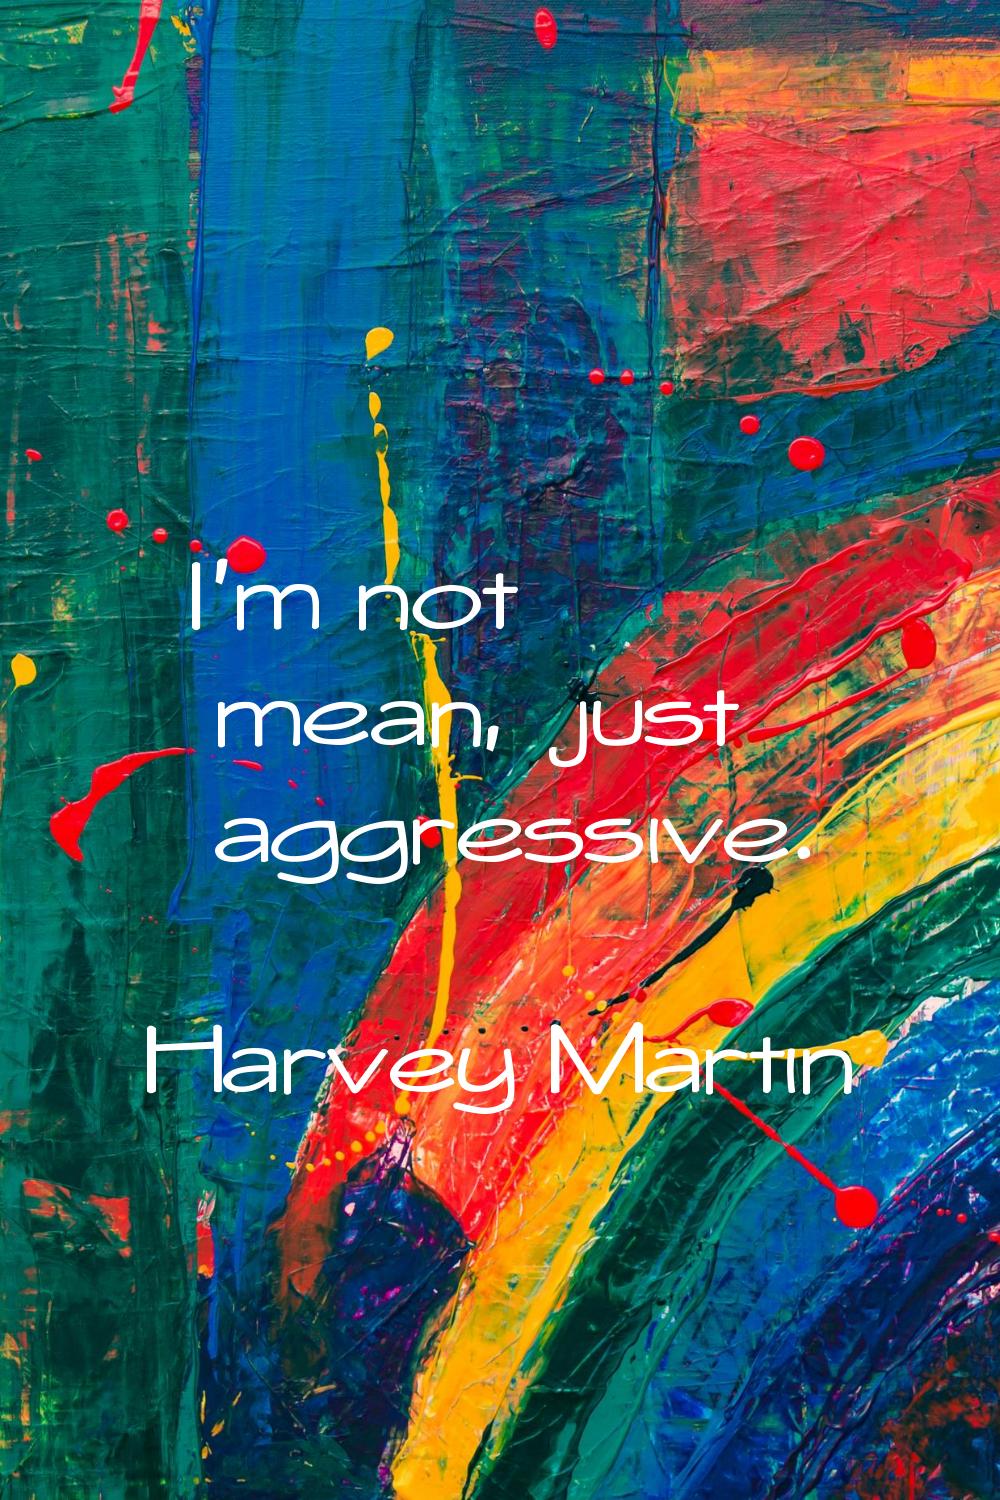 I'm not mean, just aggressive.